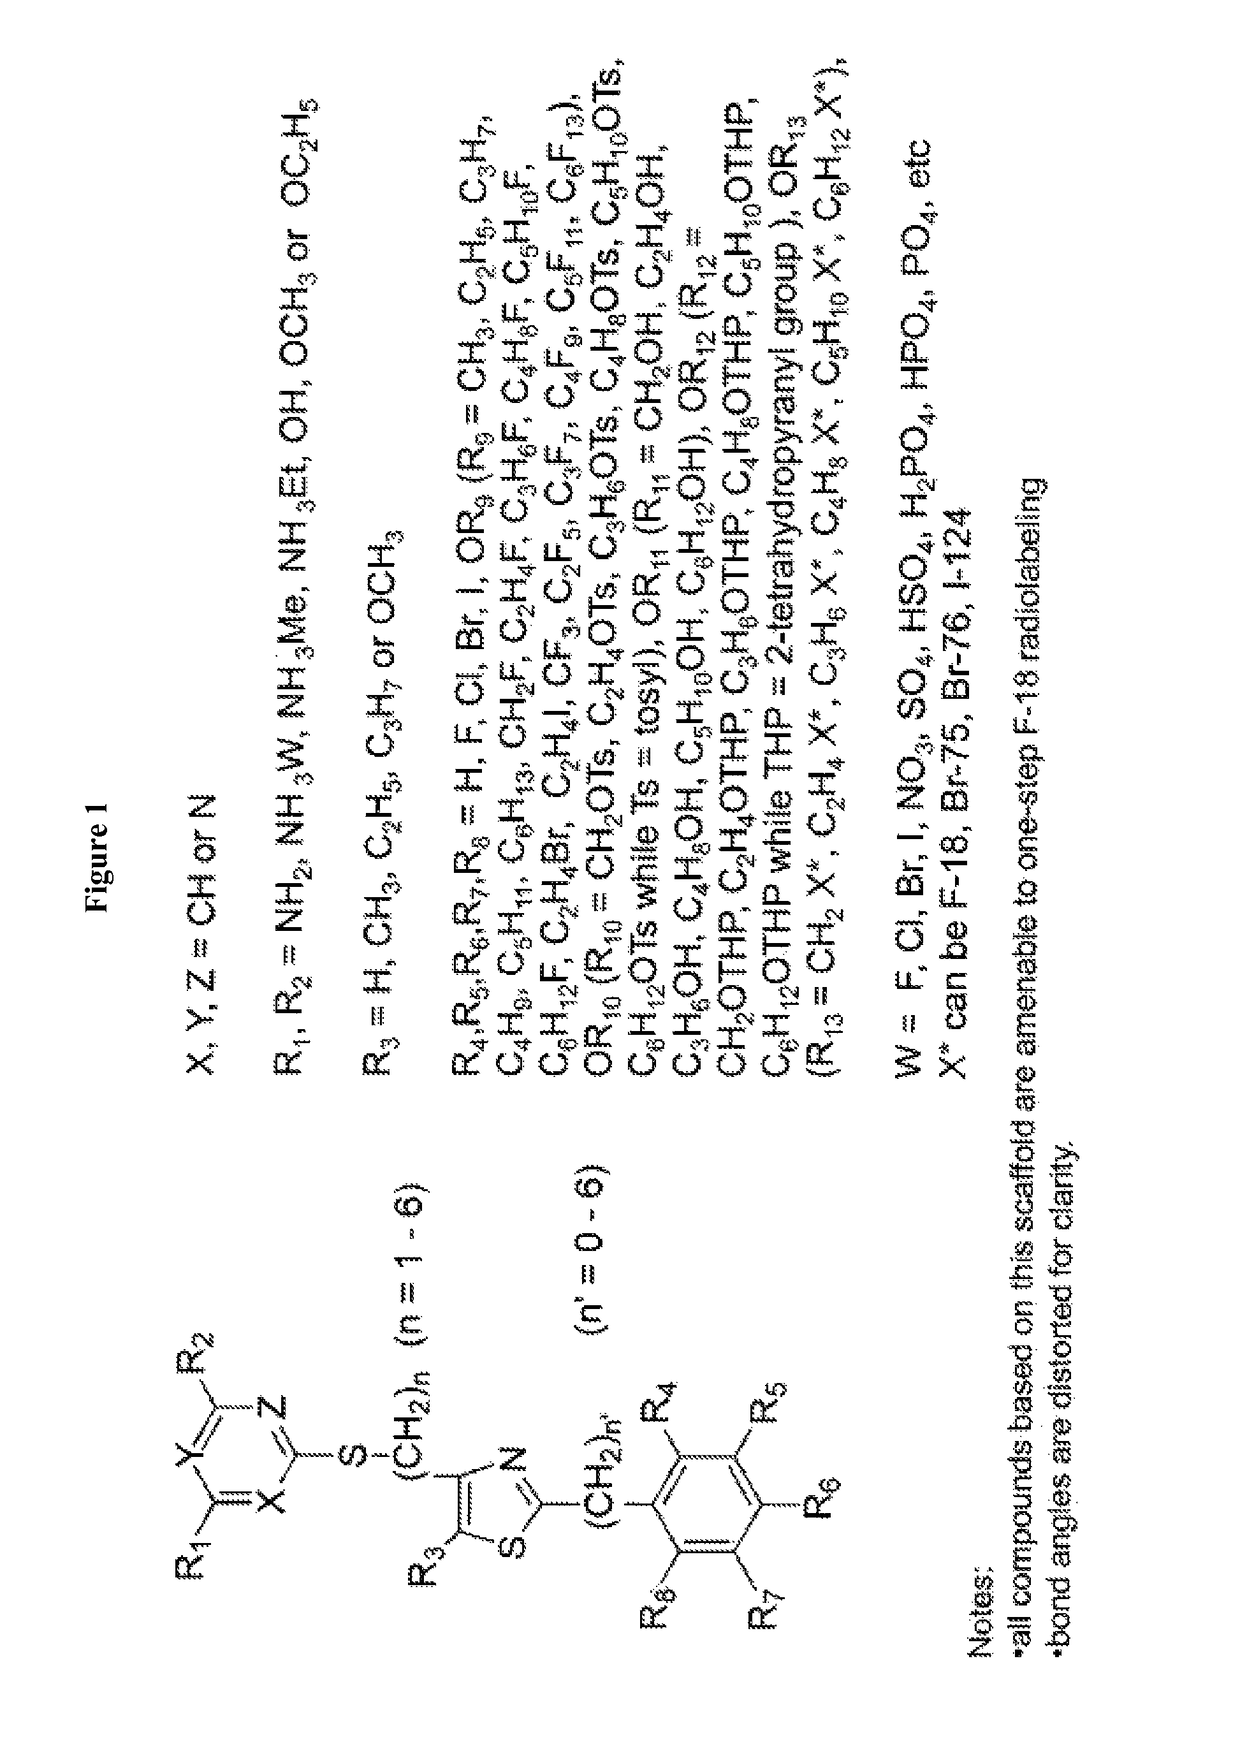 Deoxycytidine kinase binding compounds